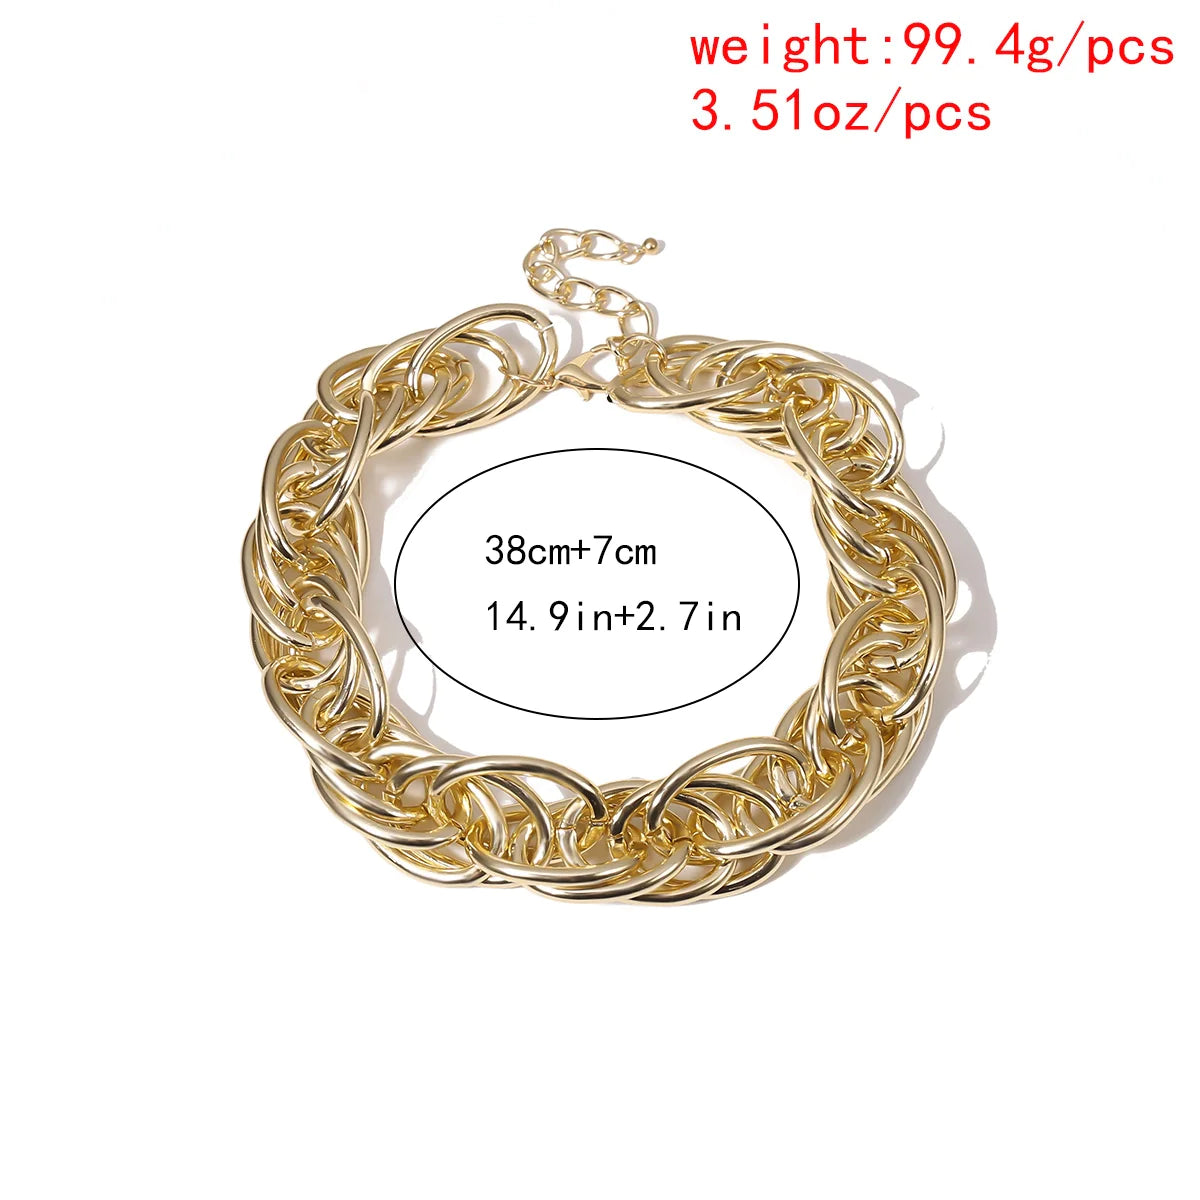 Metal Geometric O-chain Necklace